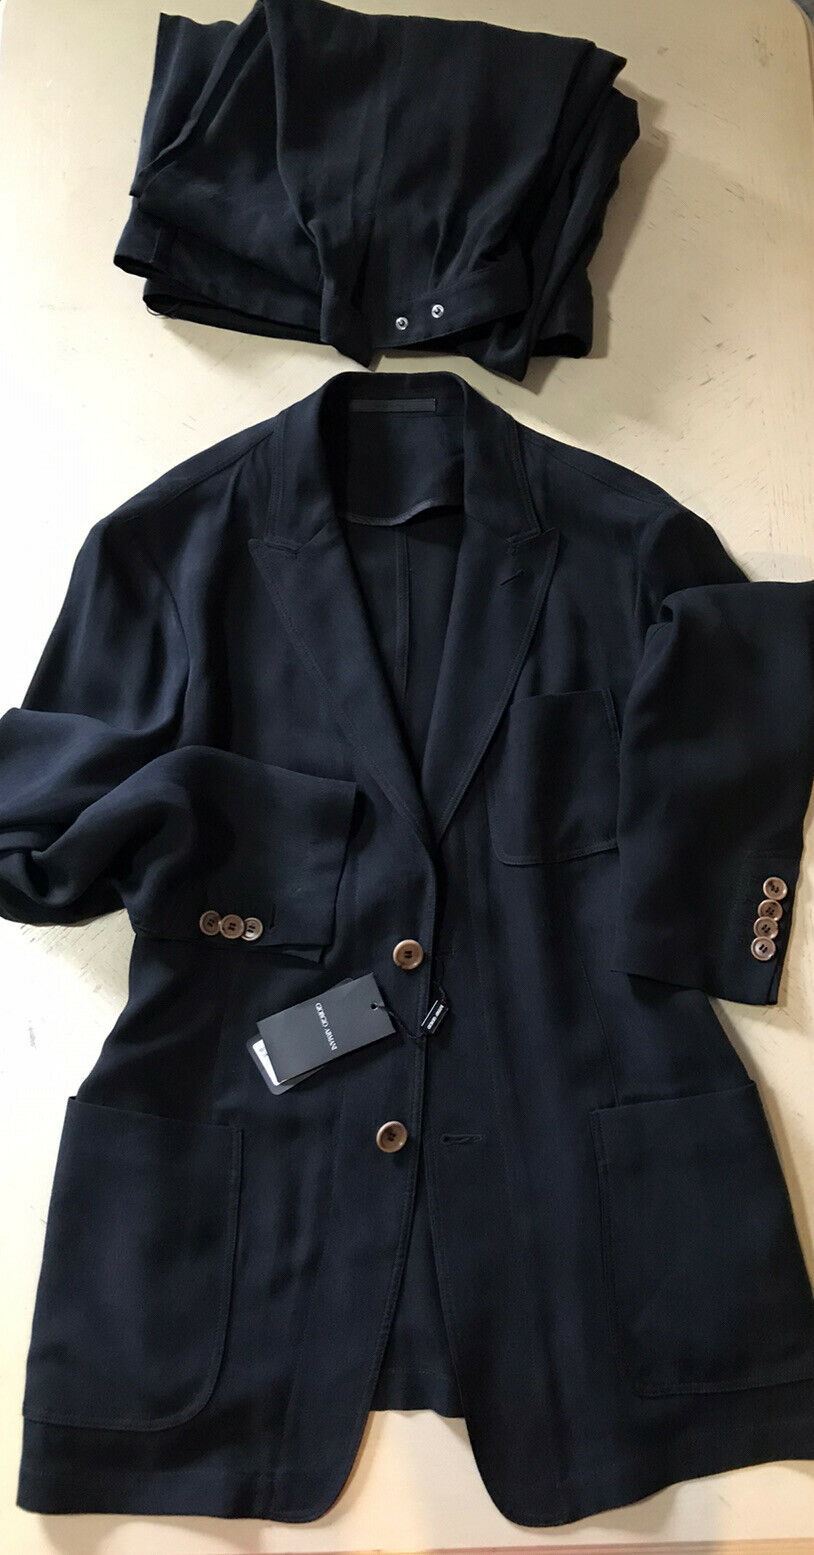 New $3500 Giorgio Armani Men’s Suit Navy 42 US/52 Eu Italy